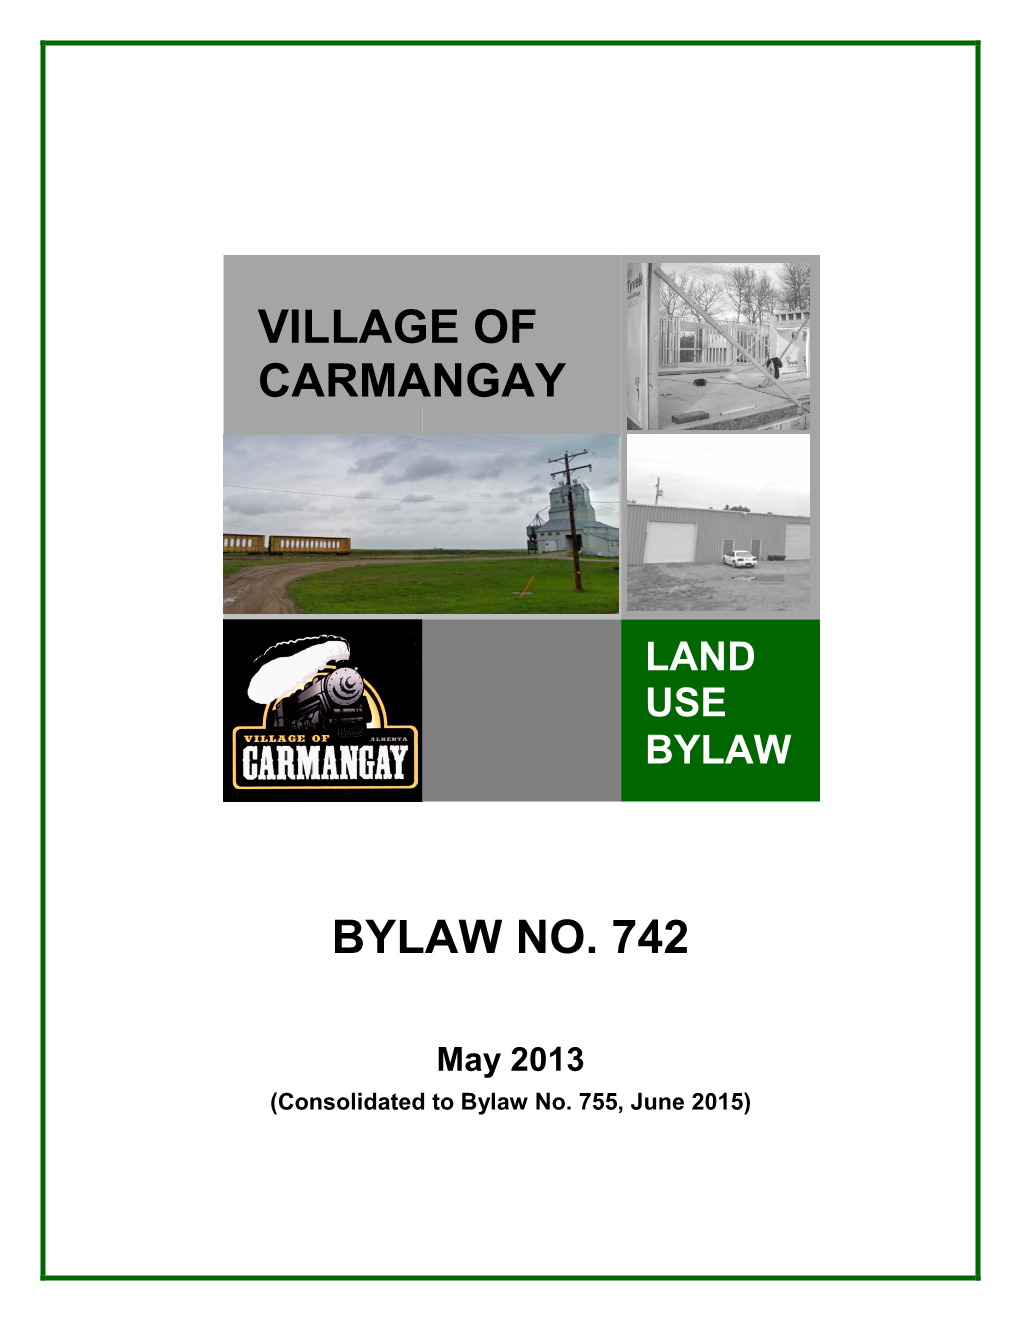 Carmangay Land Use Bylaw 742 May 2013